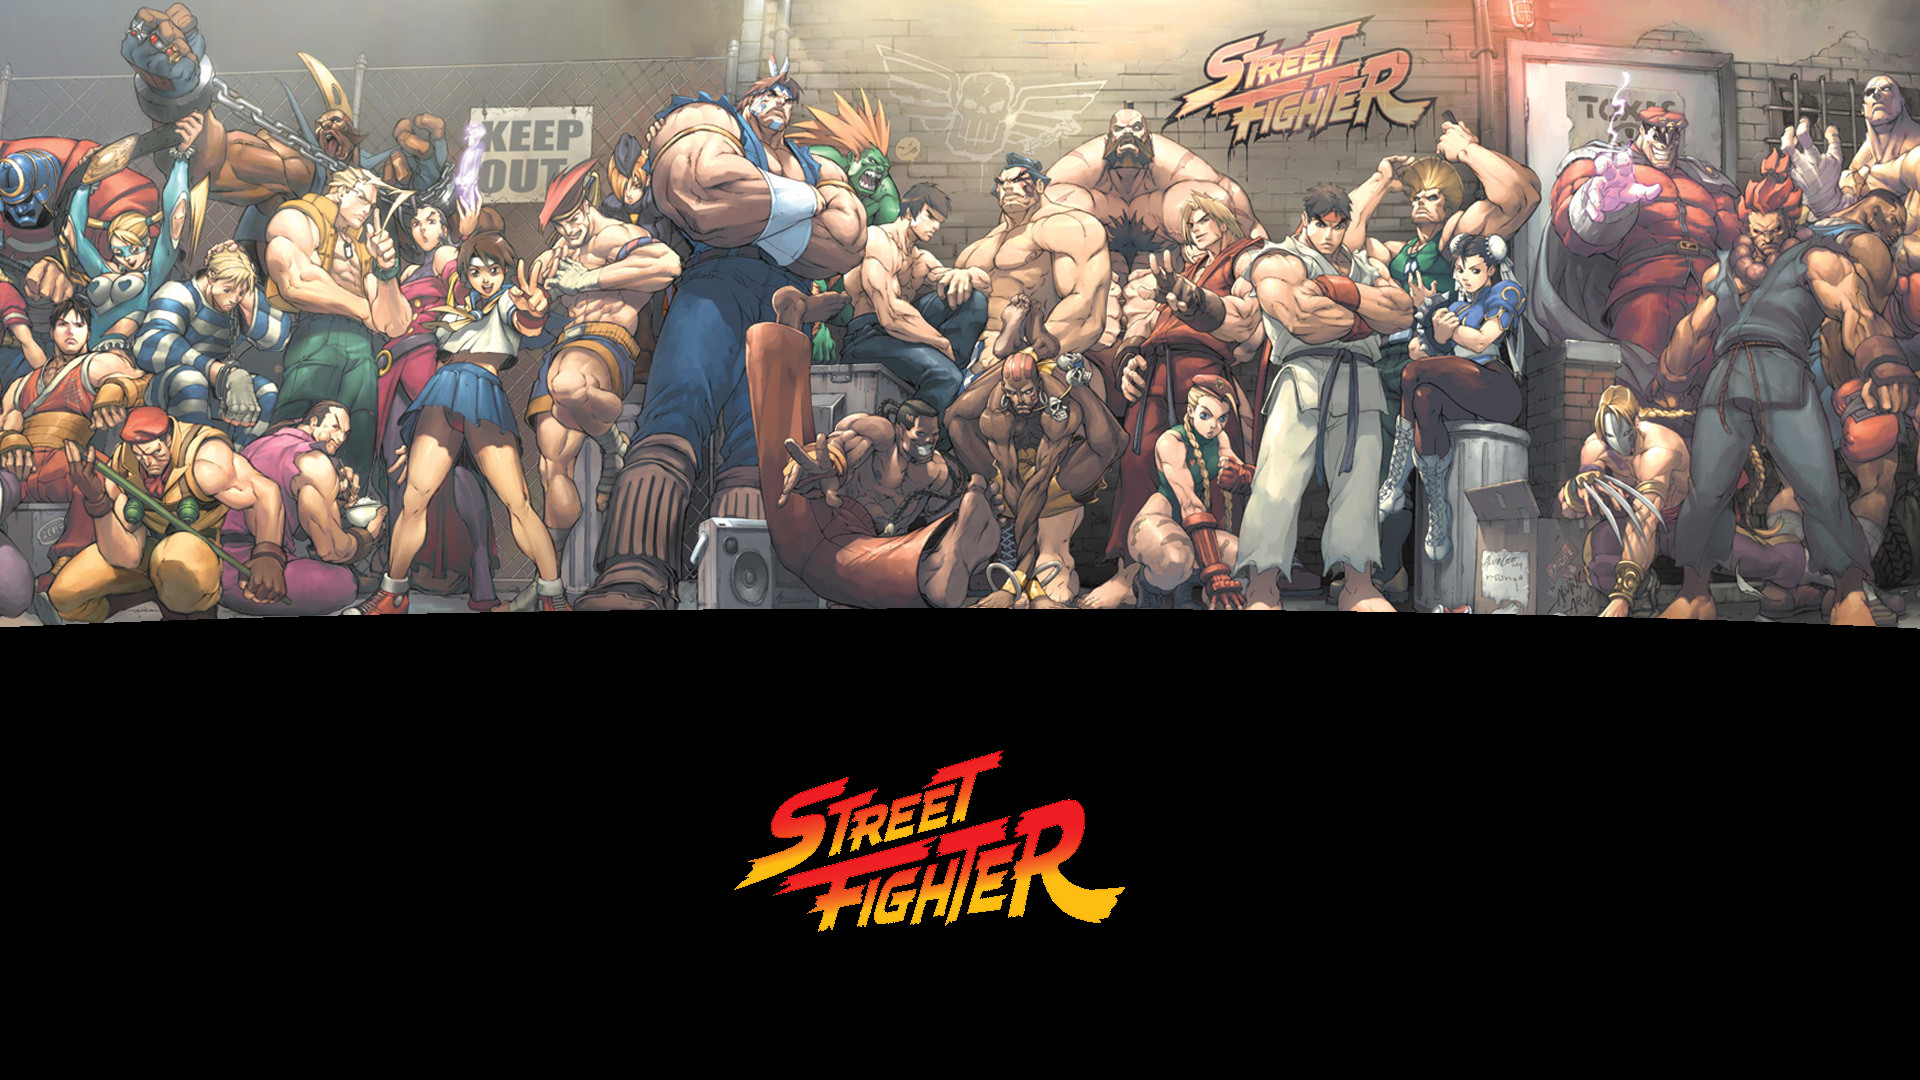 Street fighter chun li HD HD Wallpapers Pinterest Chun li, Street fighter and Video games